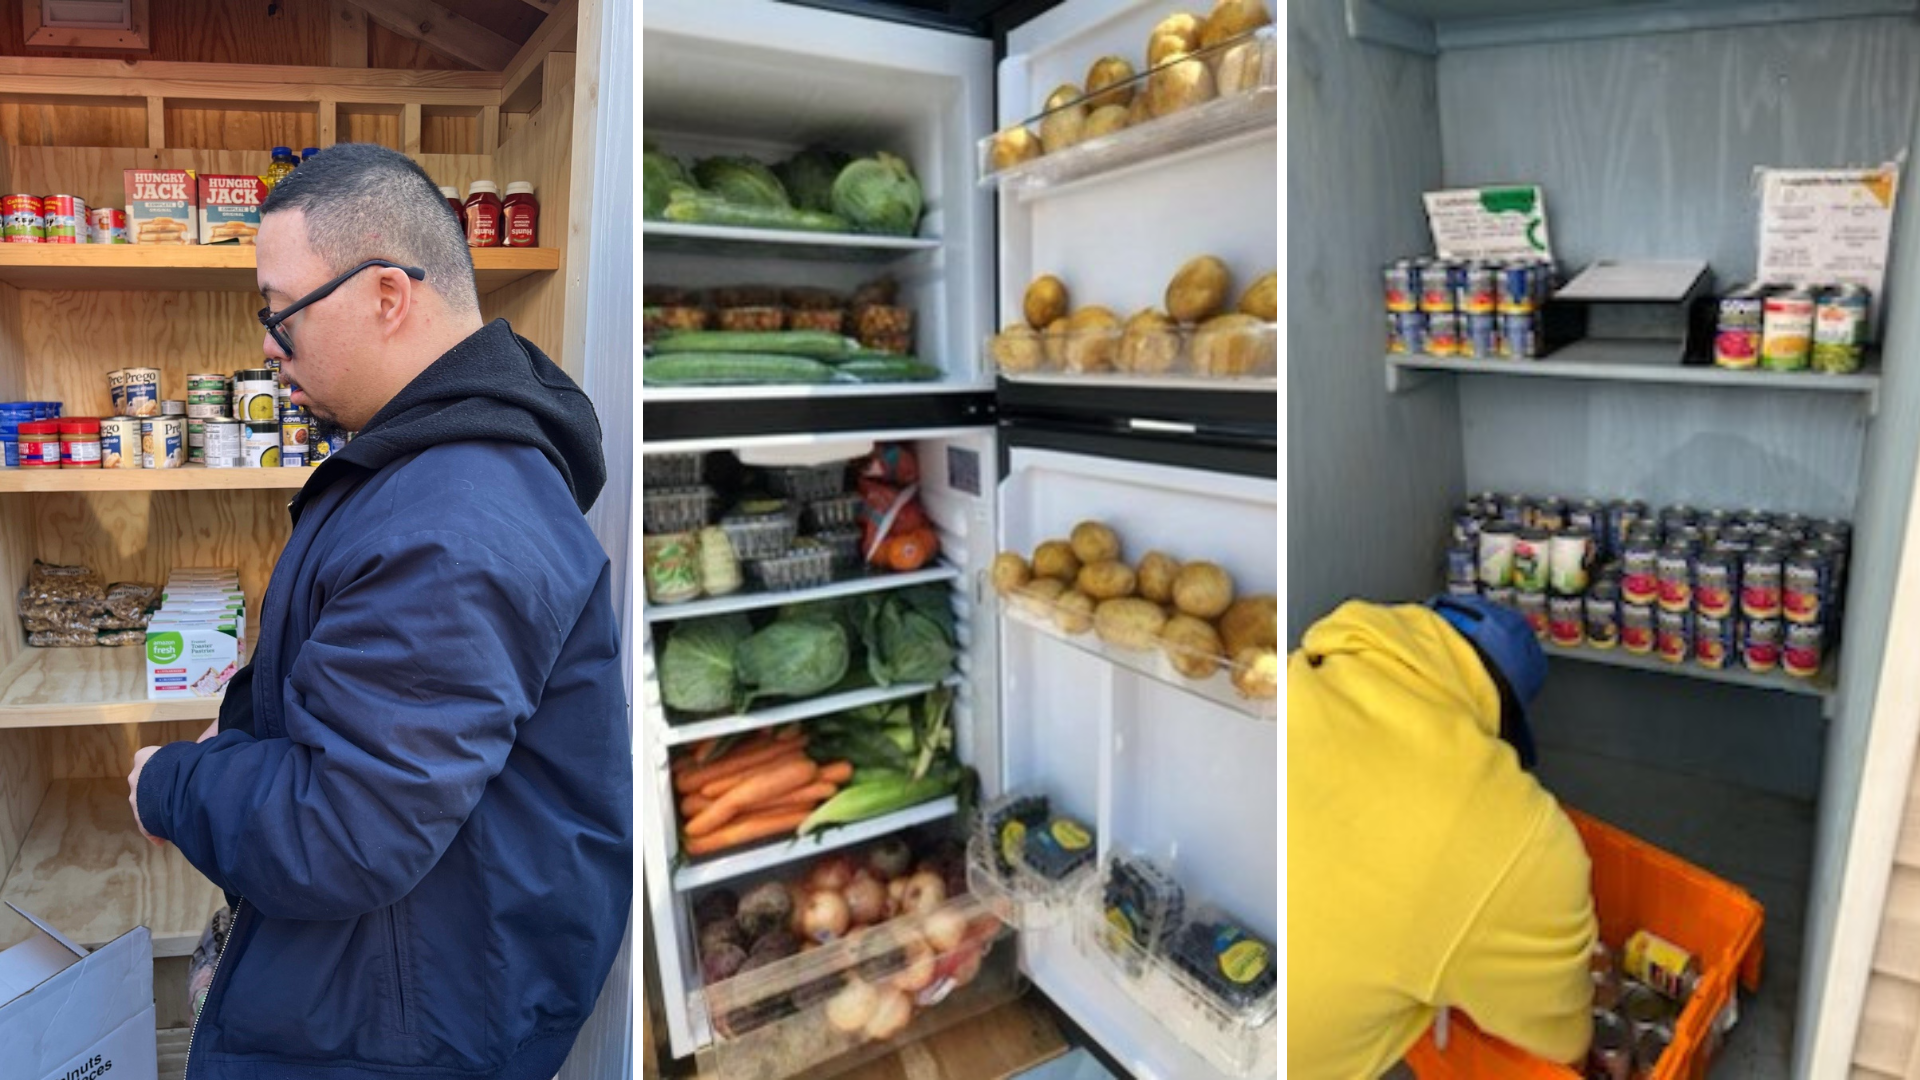 New nonprofit partnership aims to help bolster Bronx community fridges